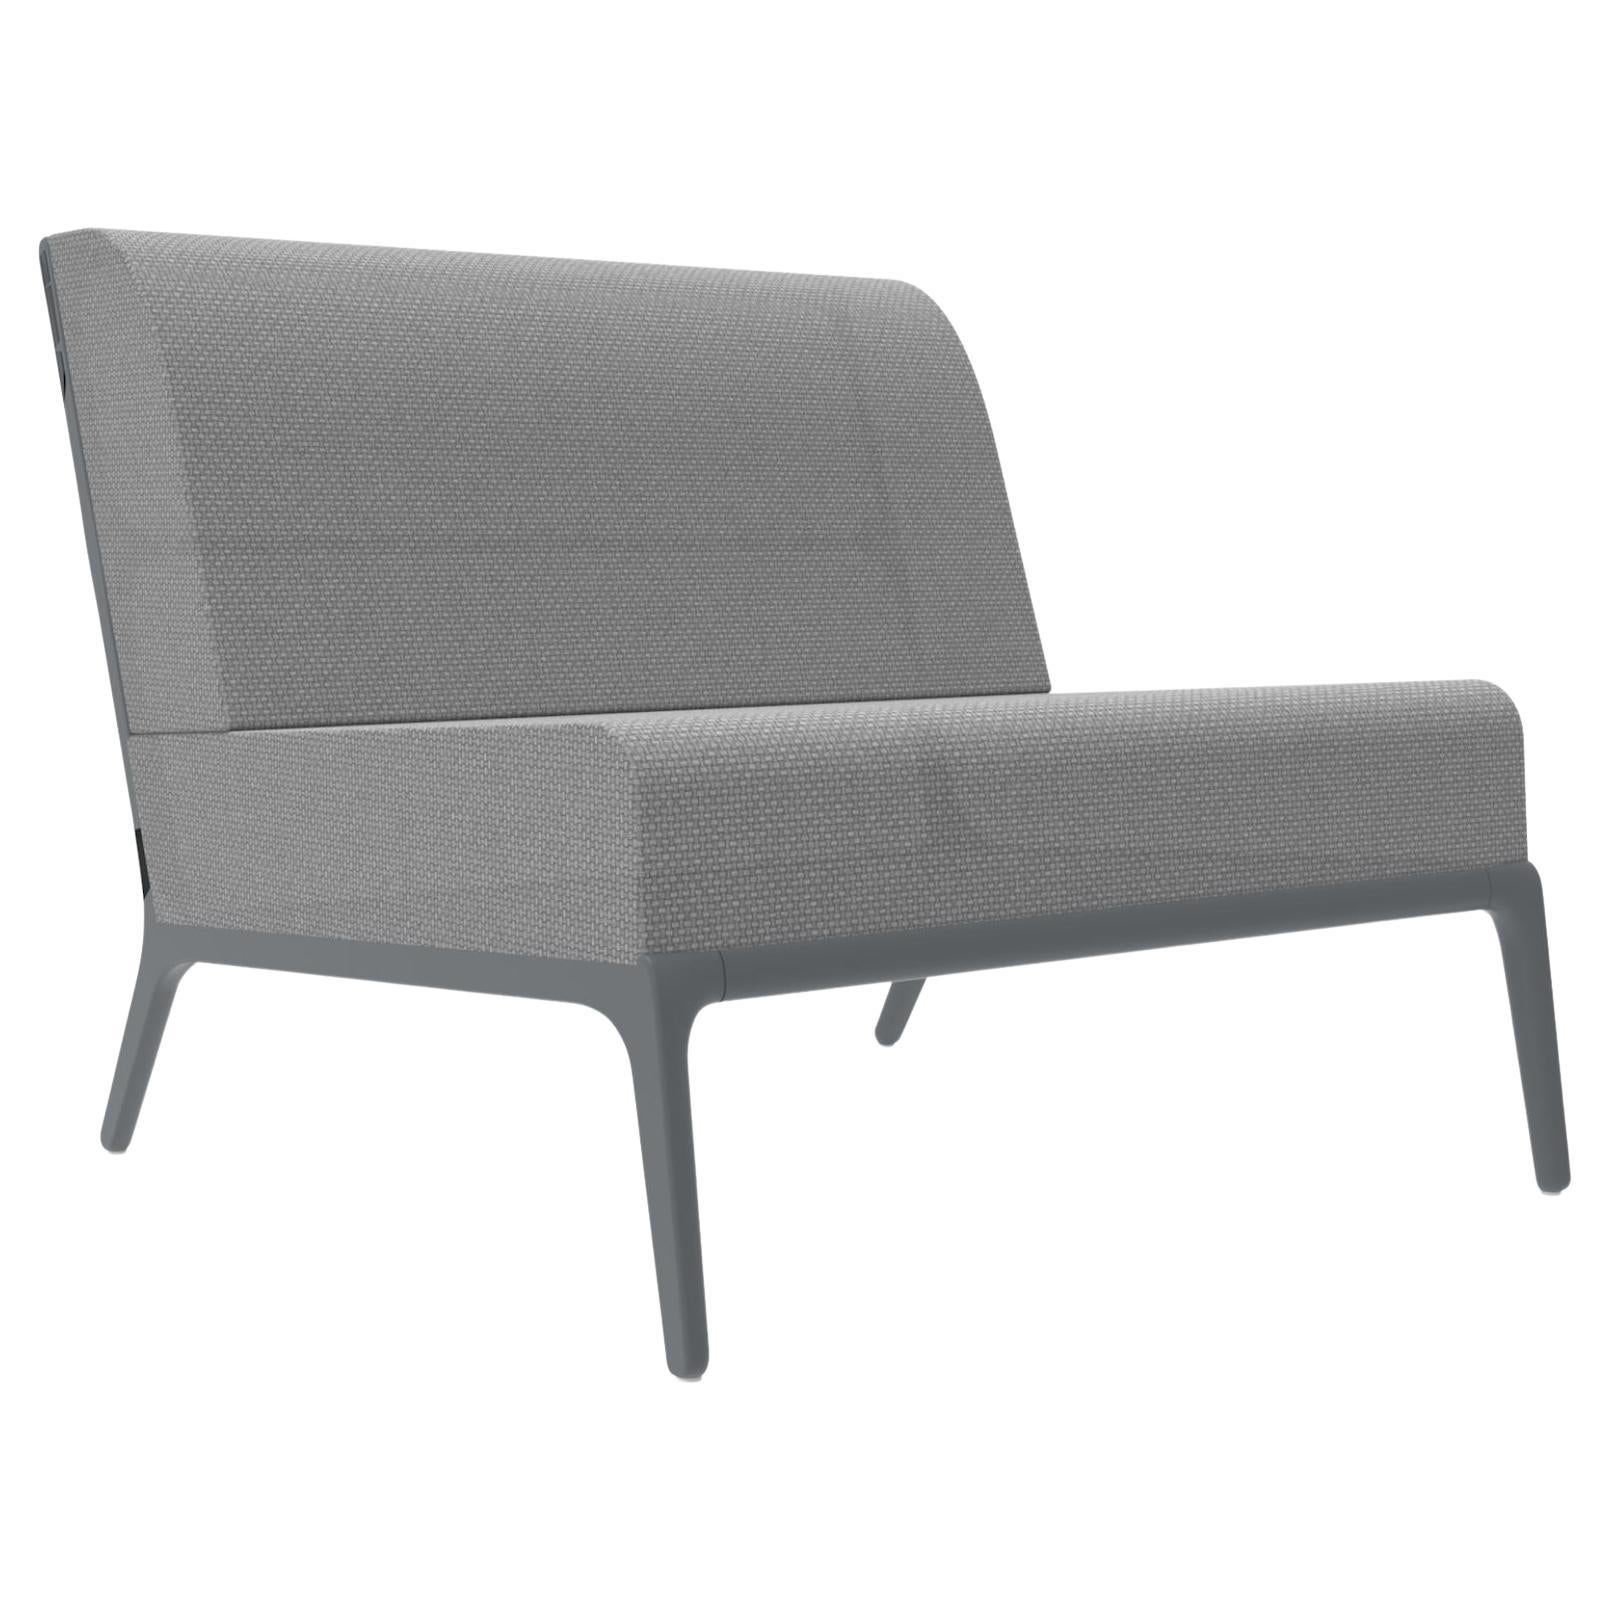 Xaloc Central 90 Grey Modular Sofa by Mowee For Sale